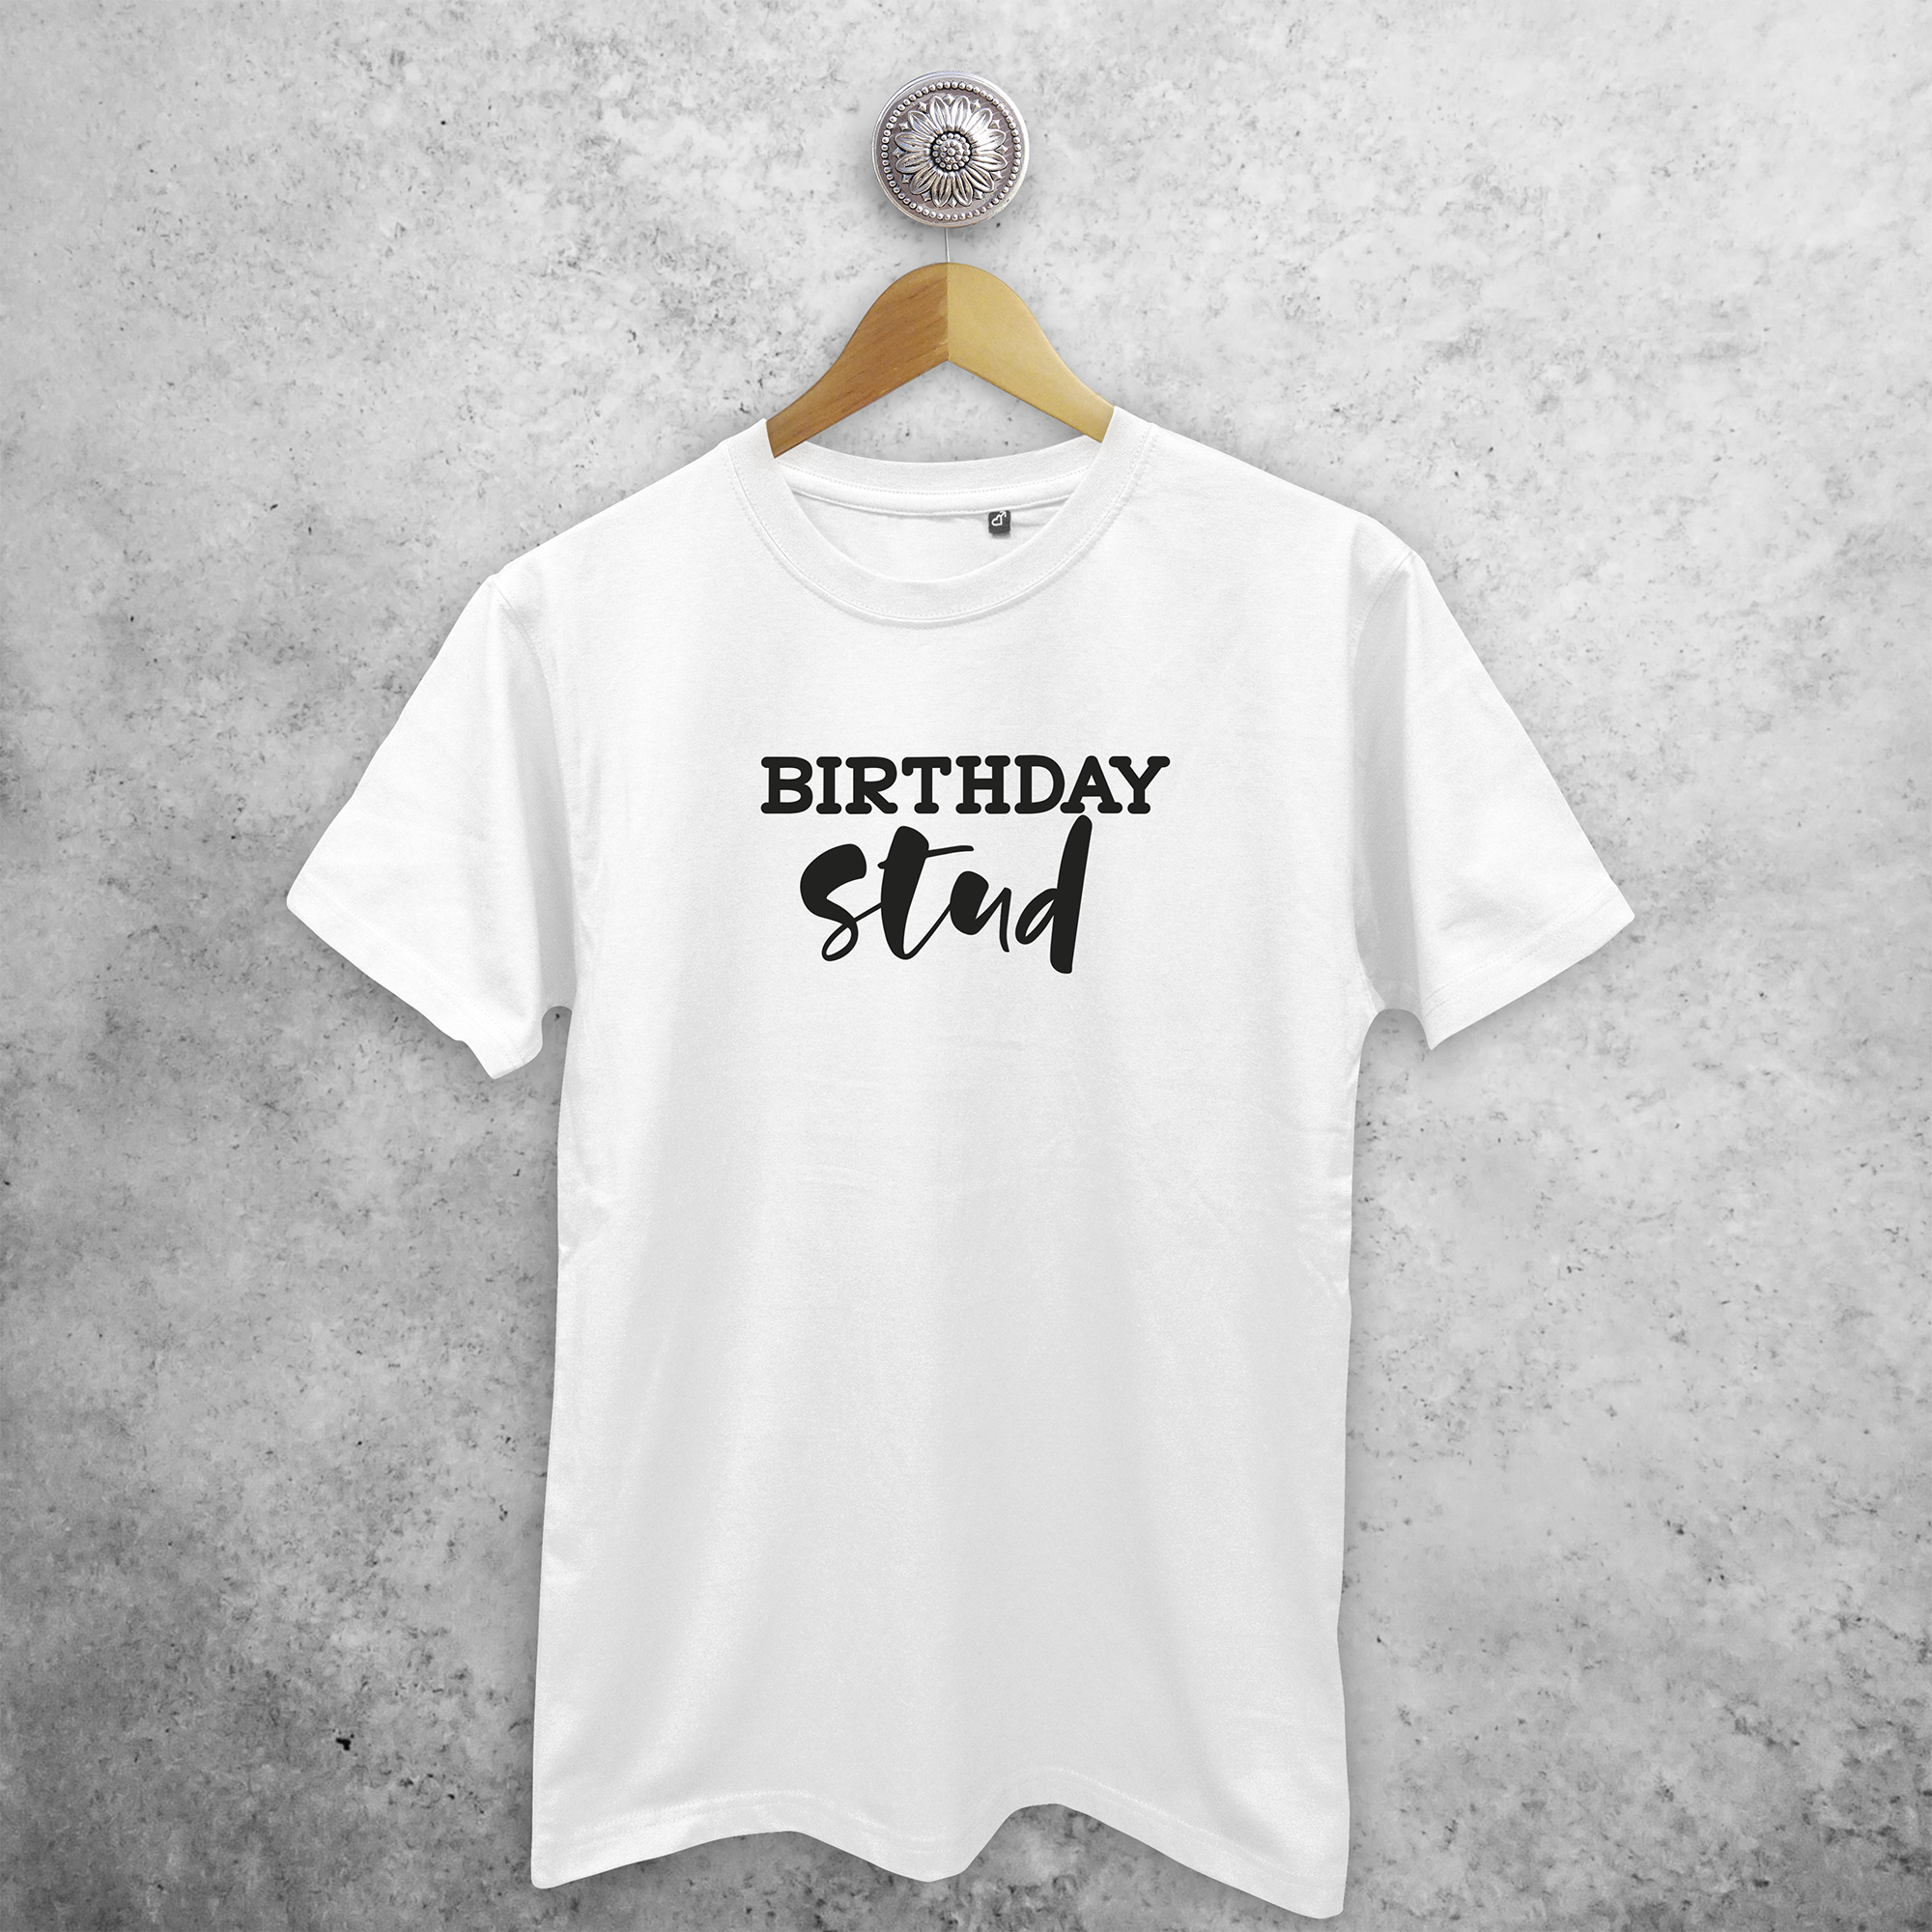 'Birthday stud' volwassene shirt